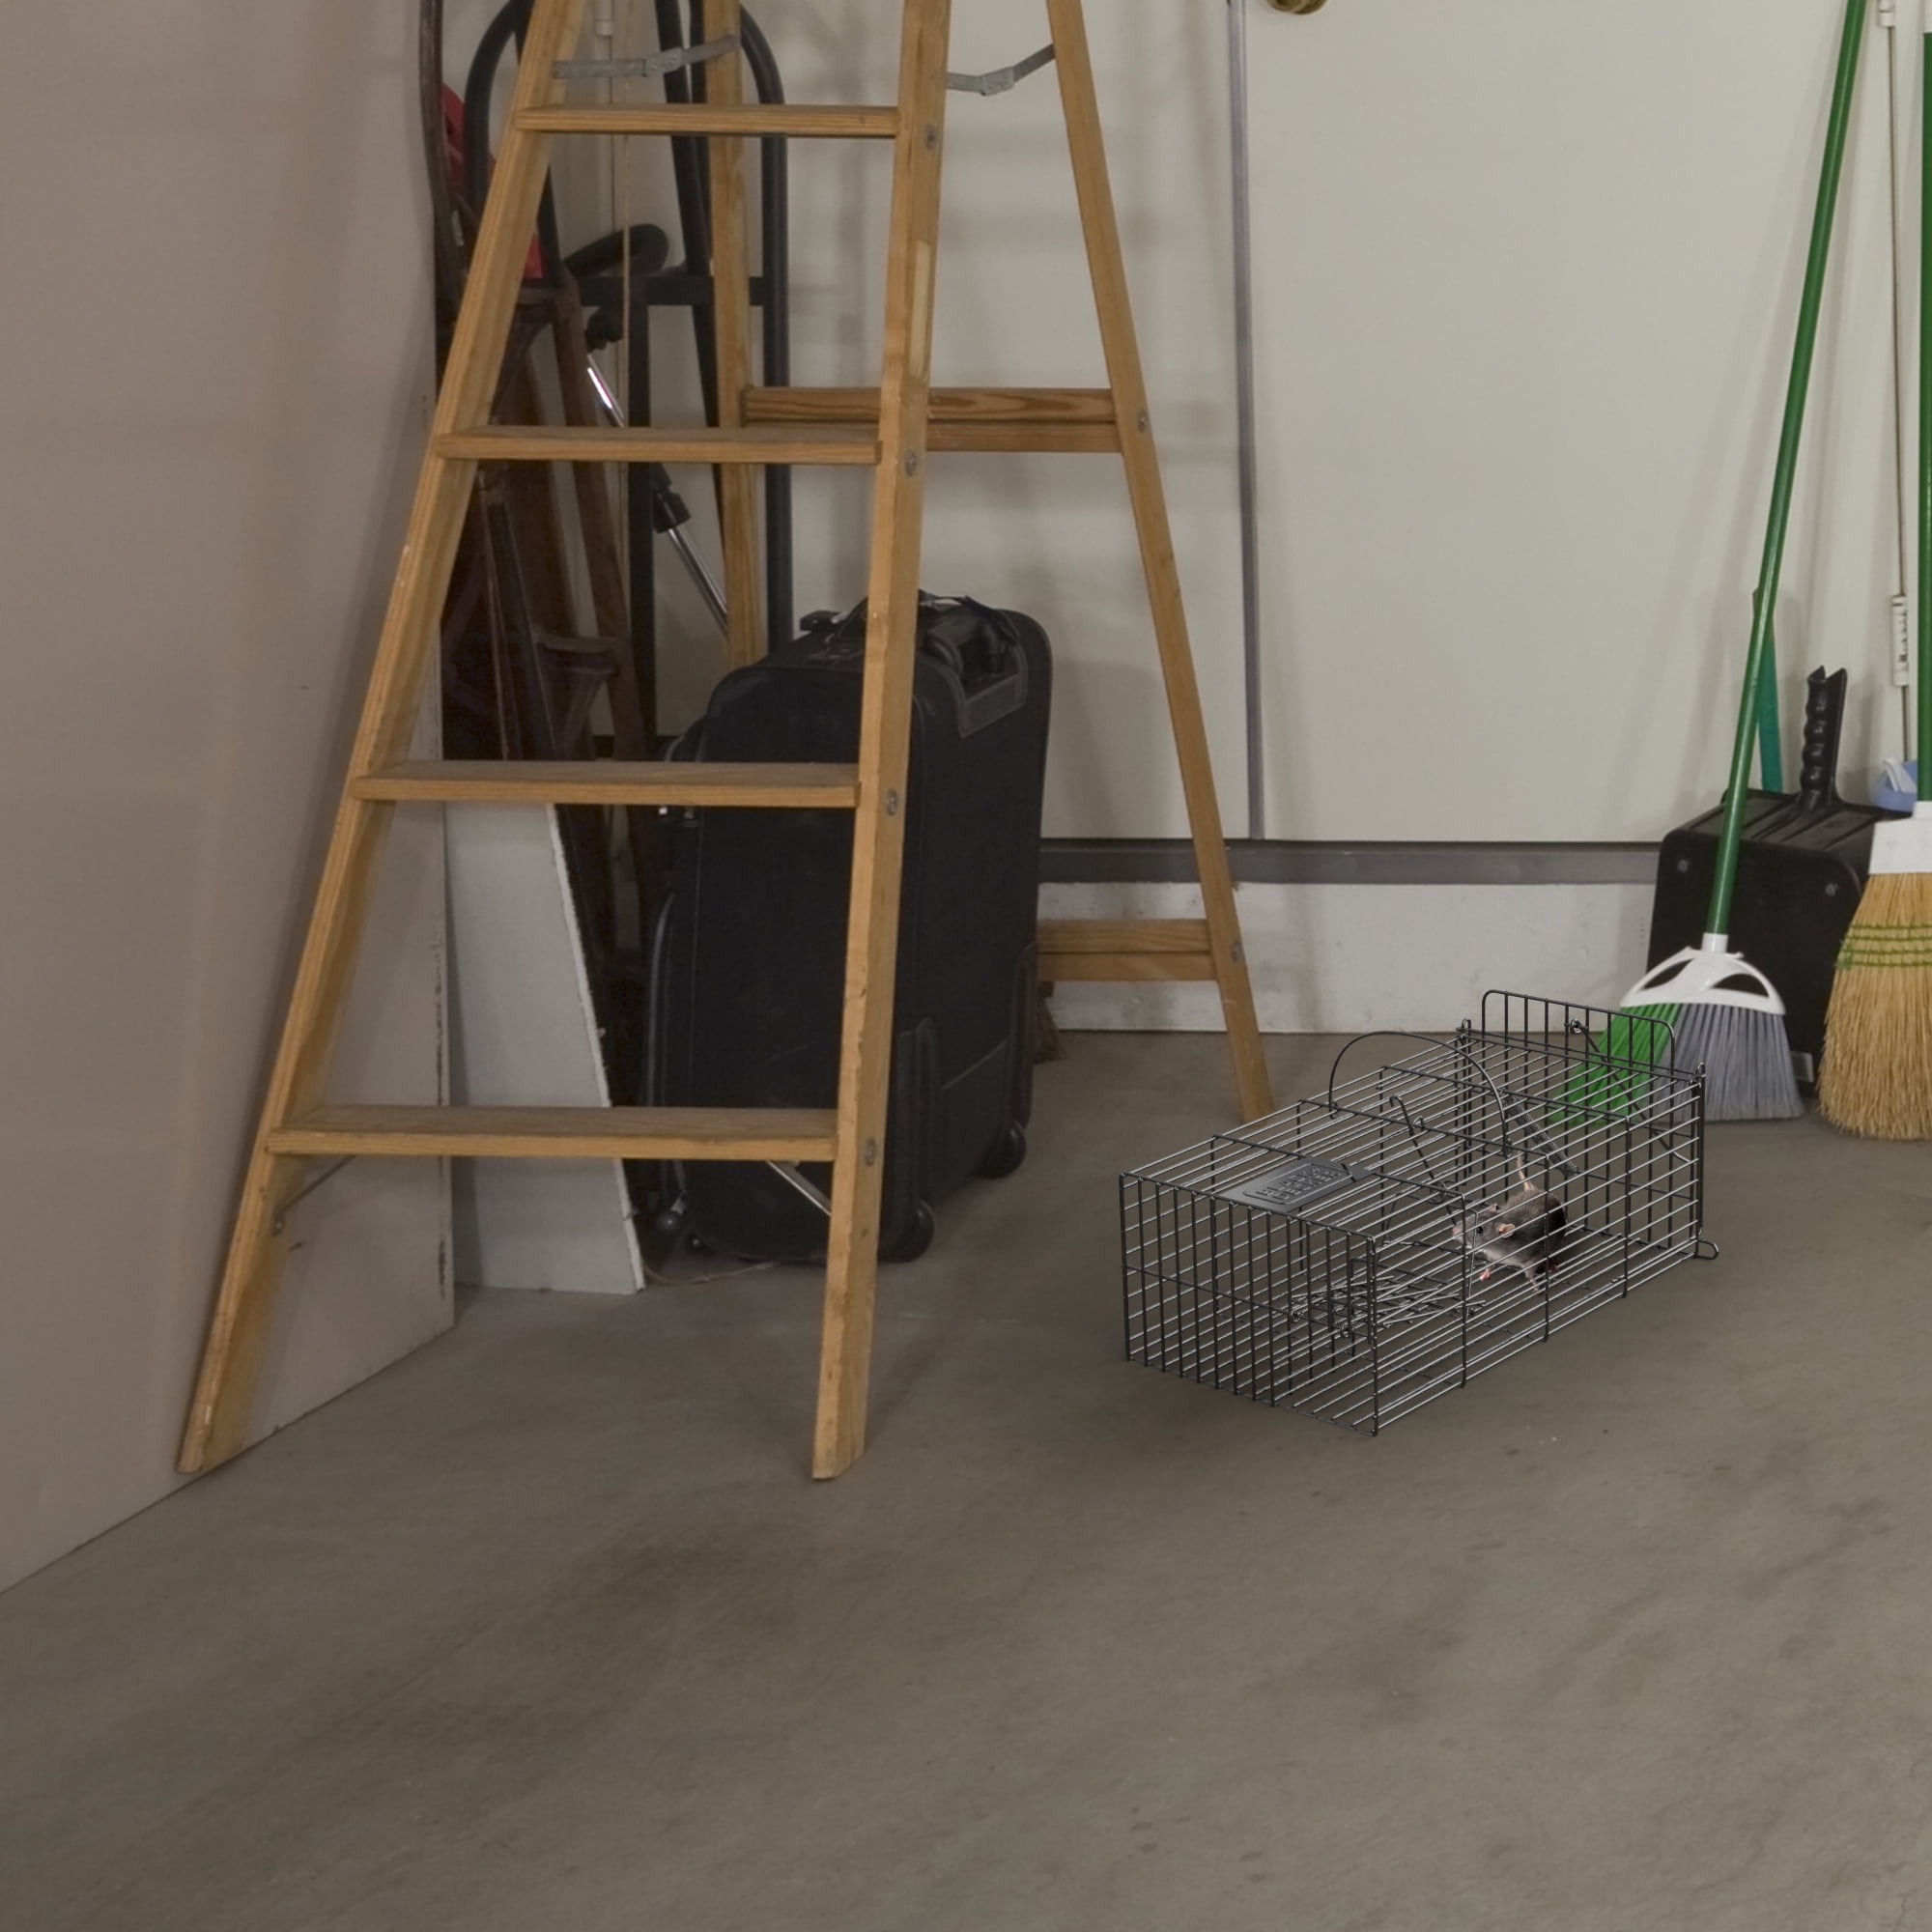 BLACK+DECKER Rat Trap Outdoor and Rat Traps Indoor - MouseTraps